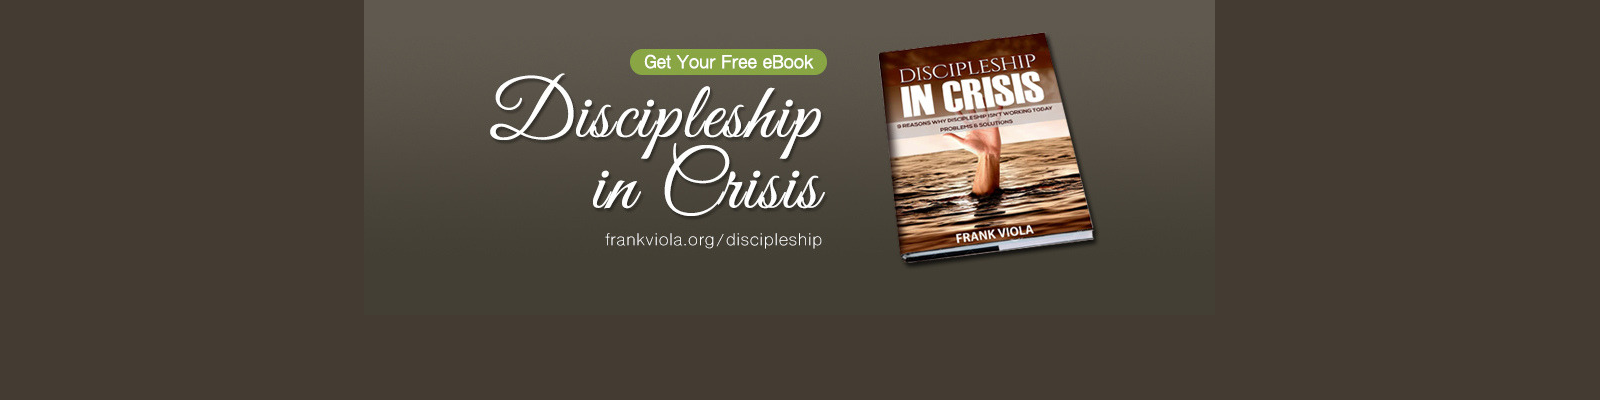 Christ is All: Frank Viola Audio